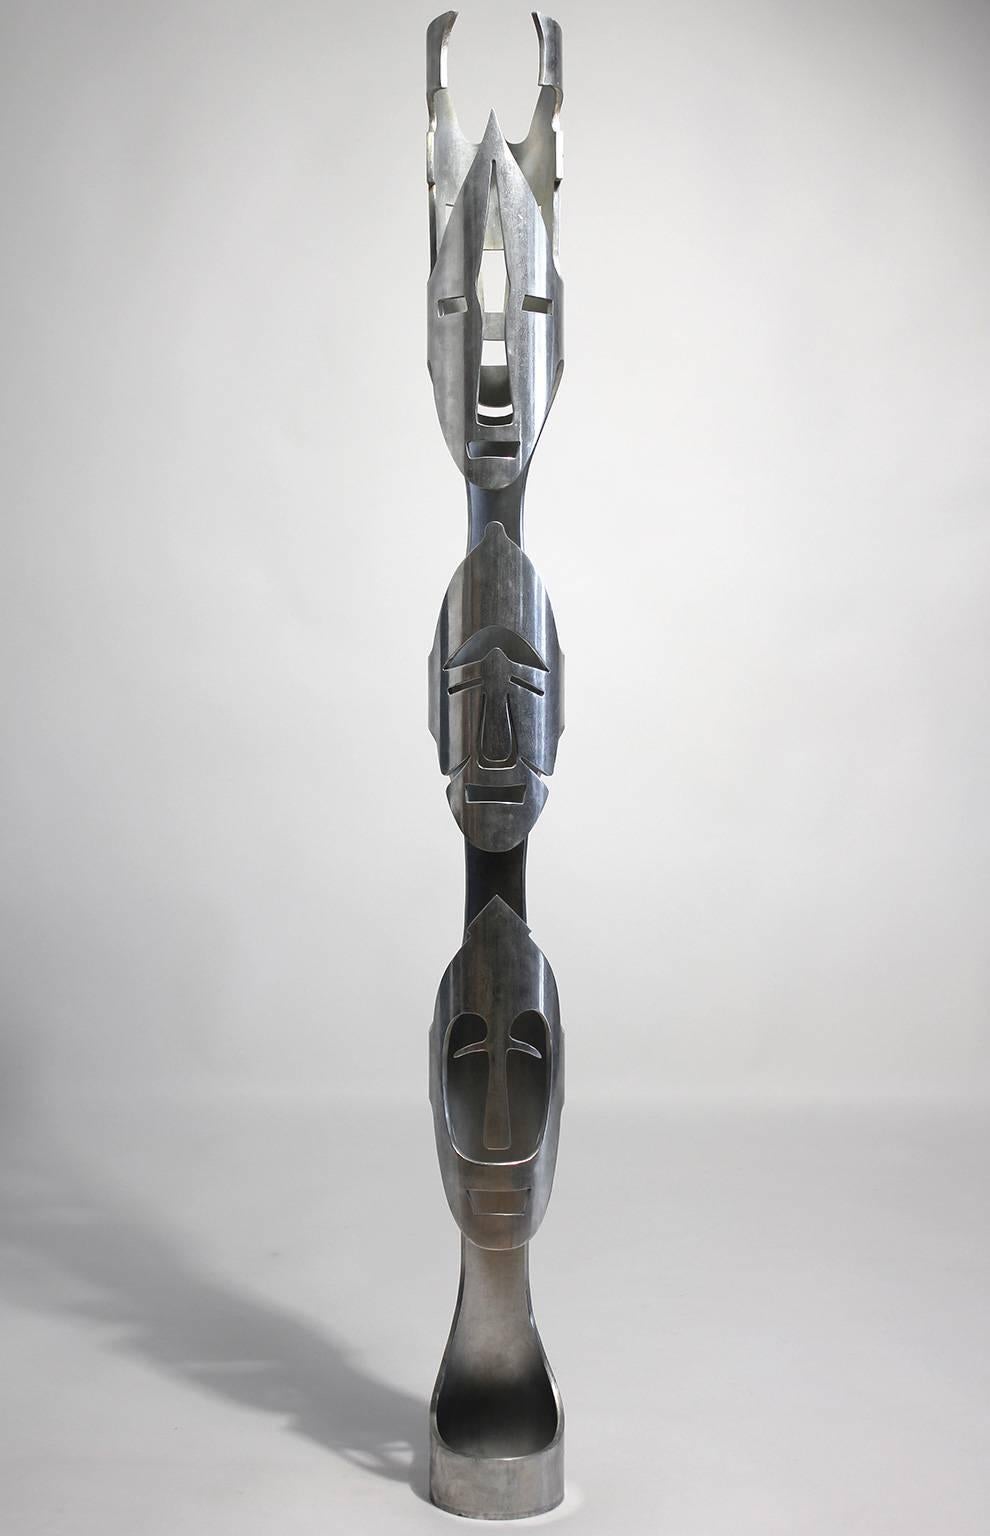 Modernist TOTEM Maske abstrakte Aluminium-Skulptur steht 4 Fuß hoch. Künstler unbekannt.